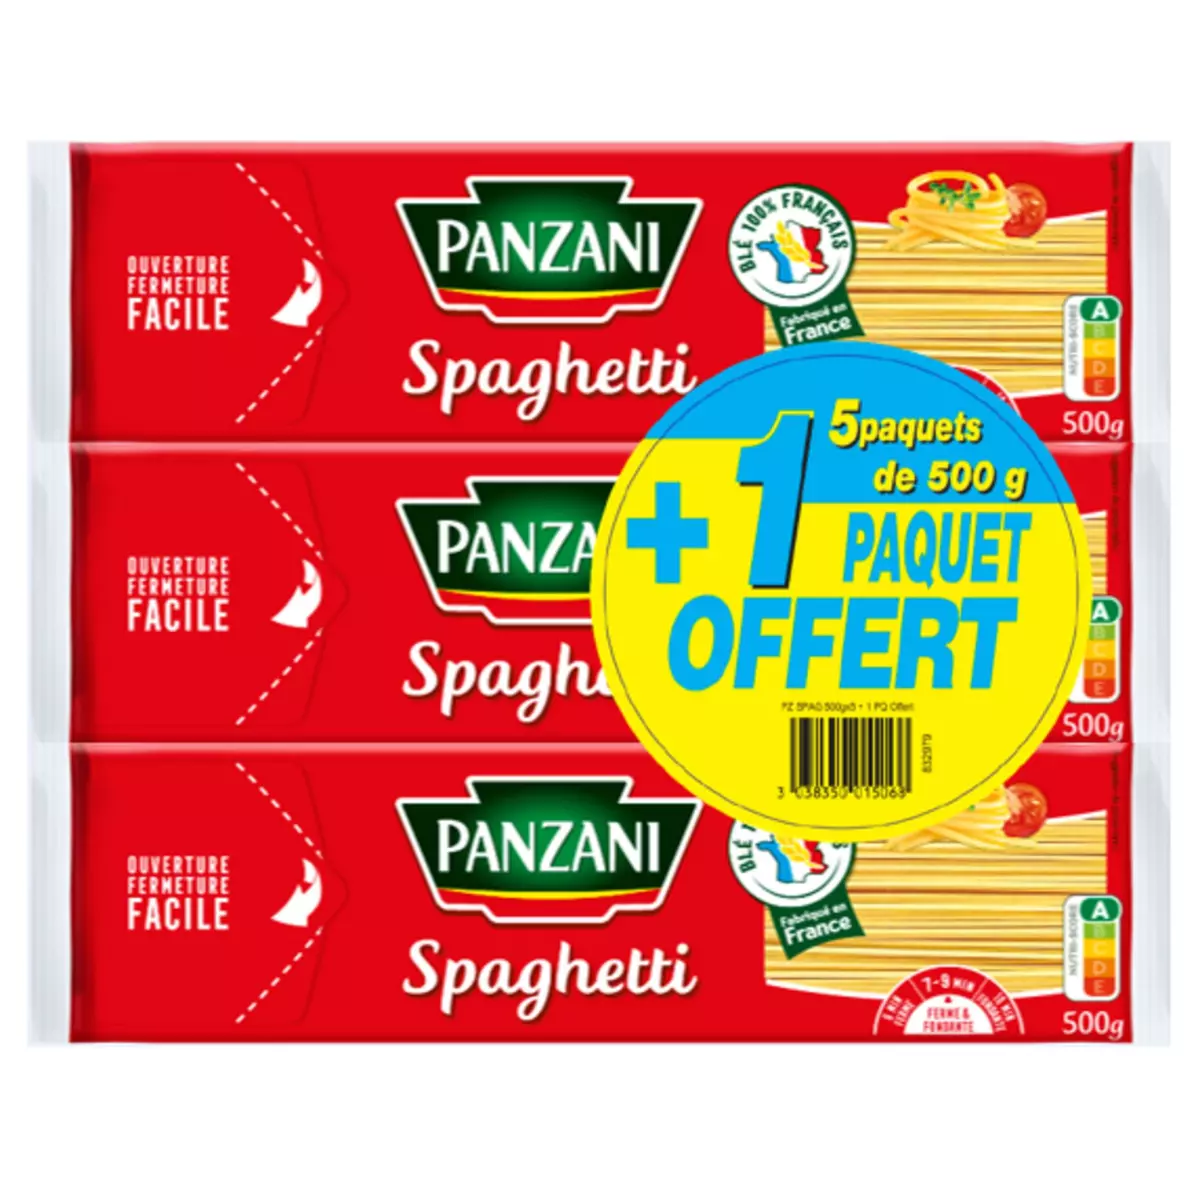 PANZANI Spaghetti qualité or dont 1 offert 6X500G